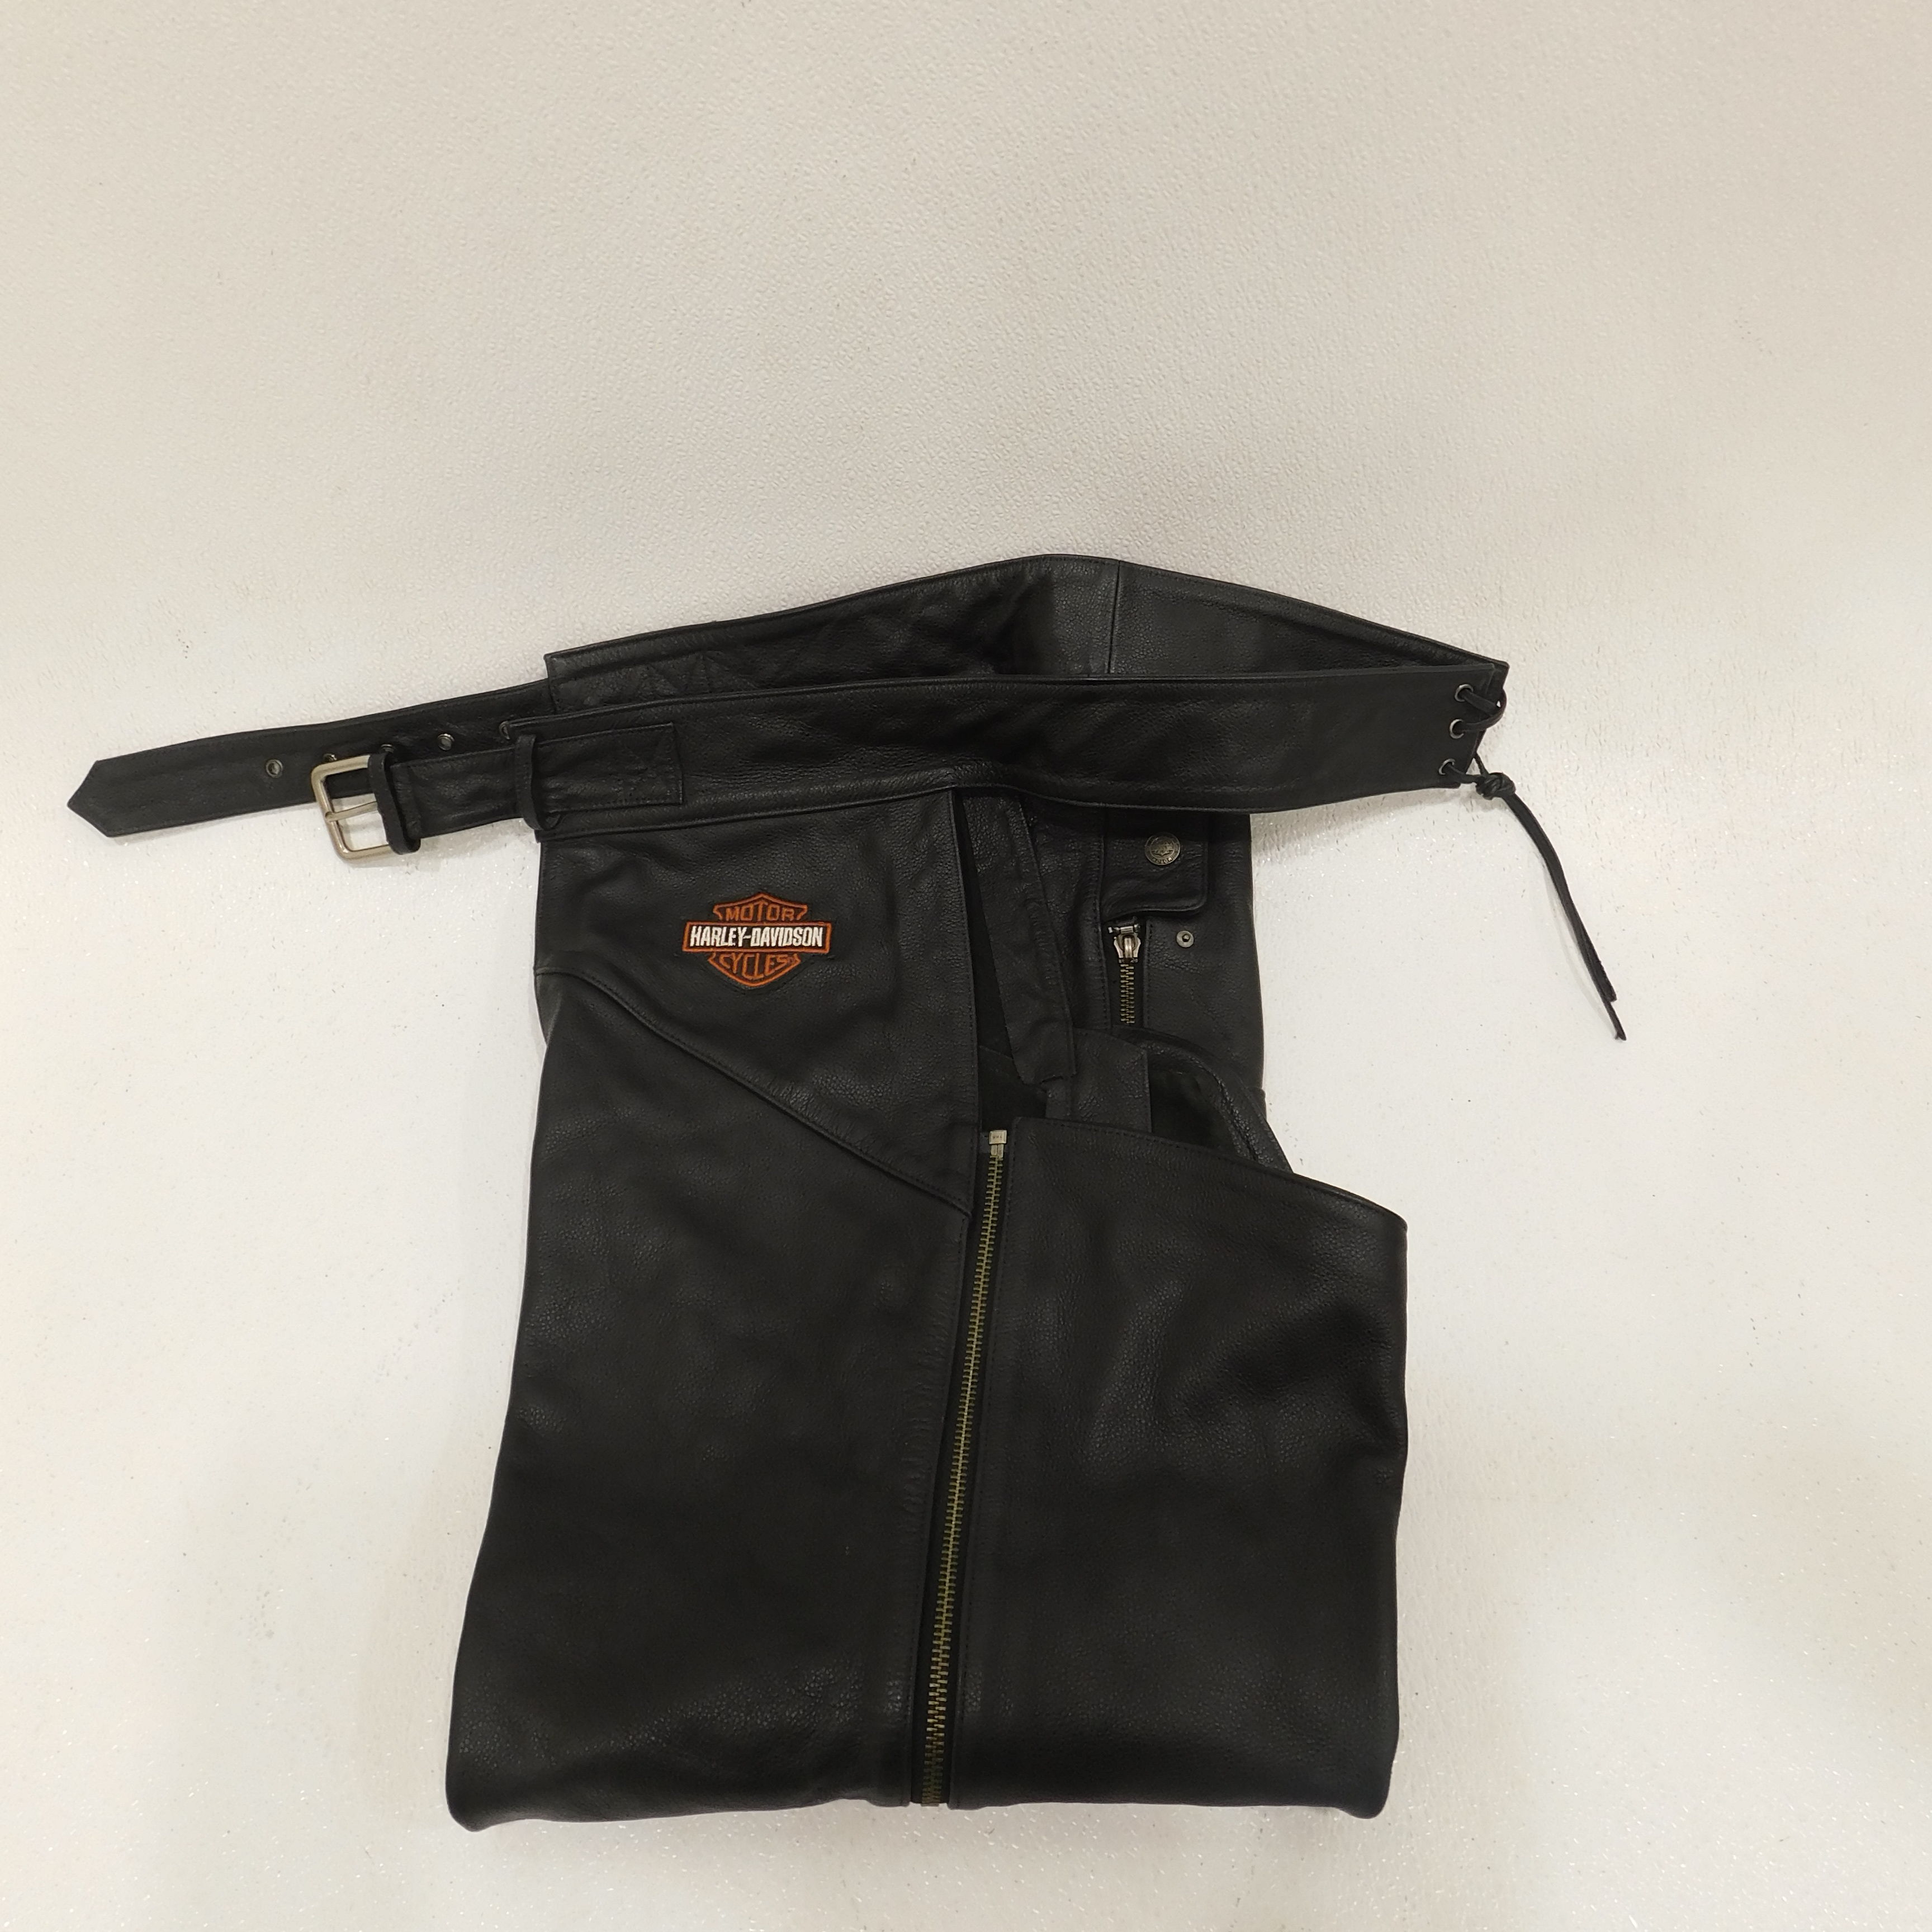 Buy the Harley Davidson Men's 2xL Black Leather Chaps